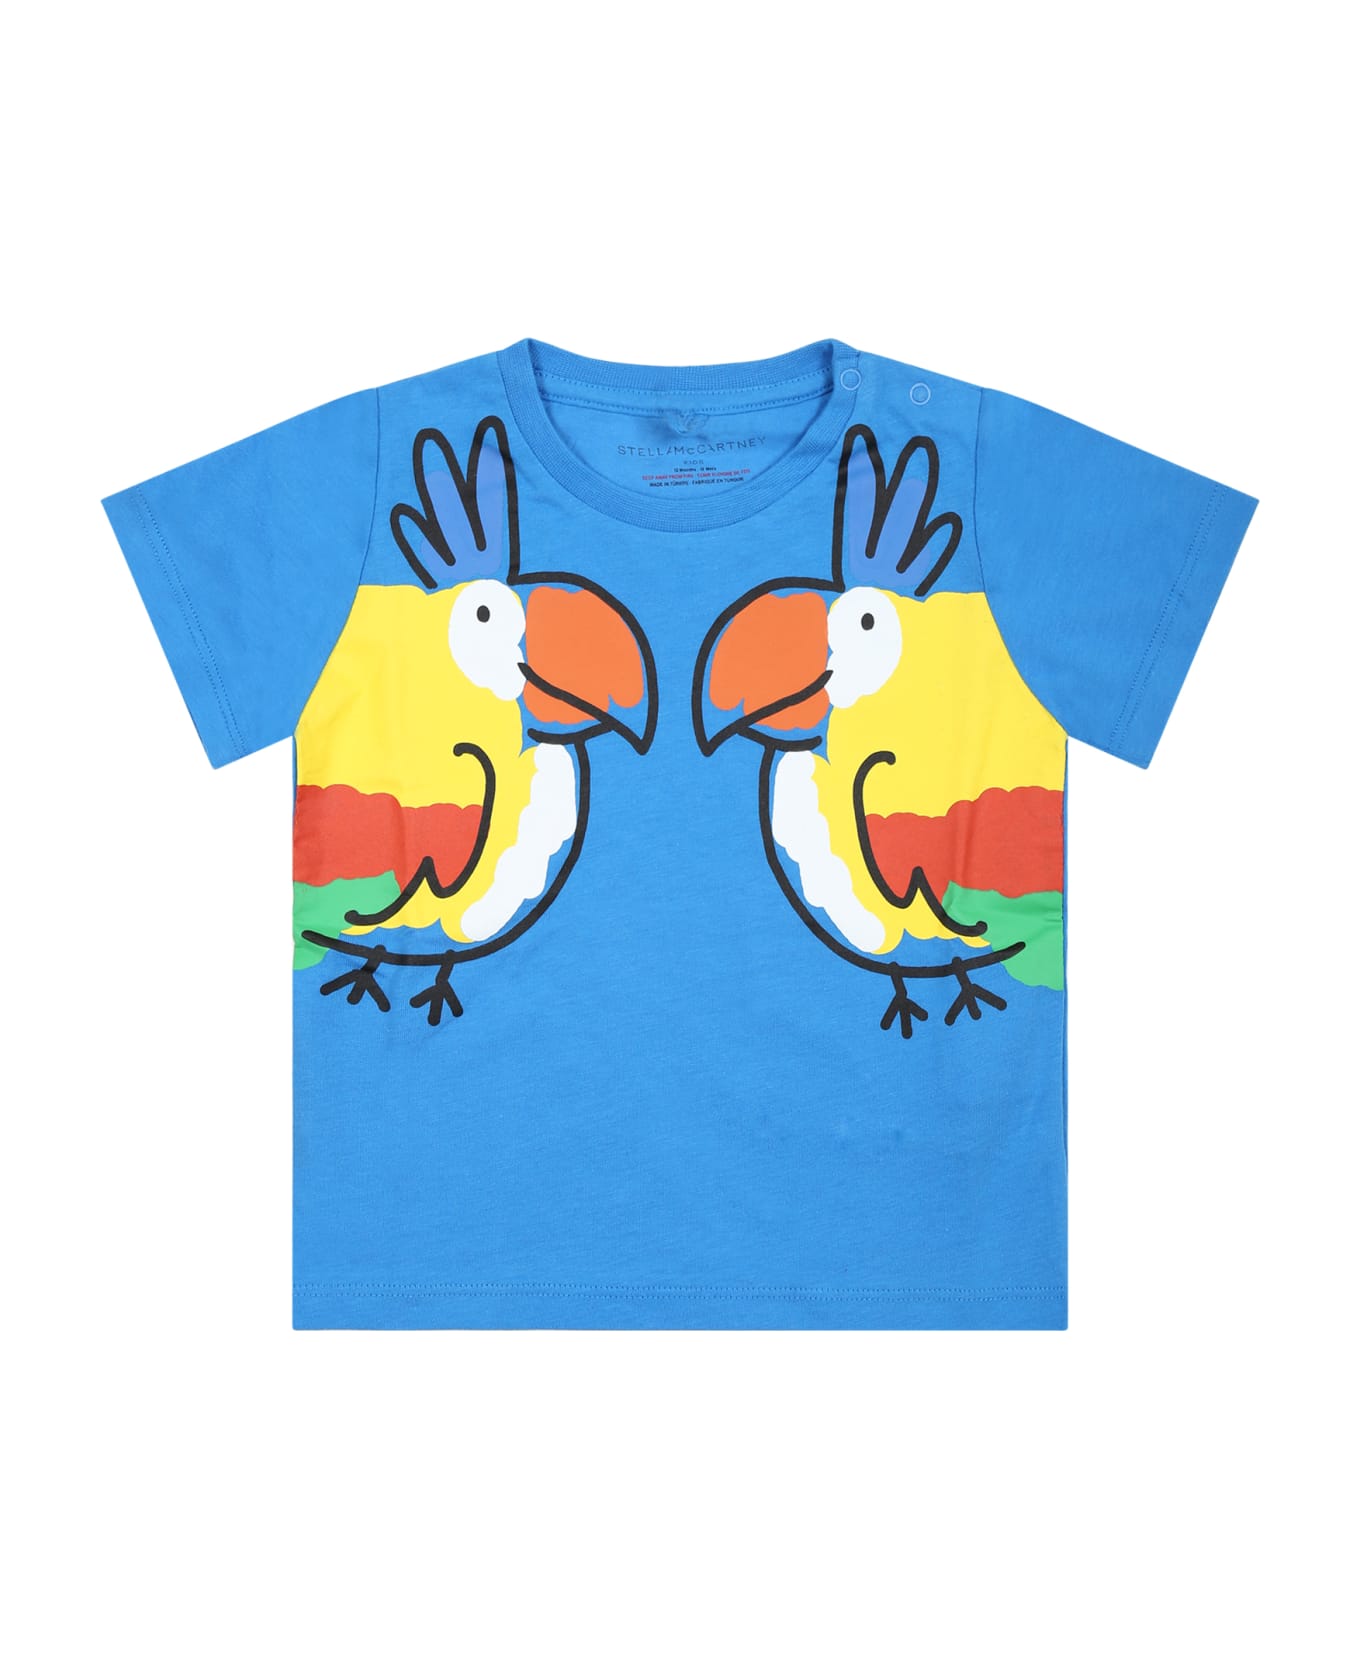 Stella McCartney Kids Light Blue T-shirt For Baby Boy With Parrots - Light Blue